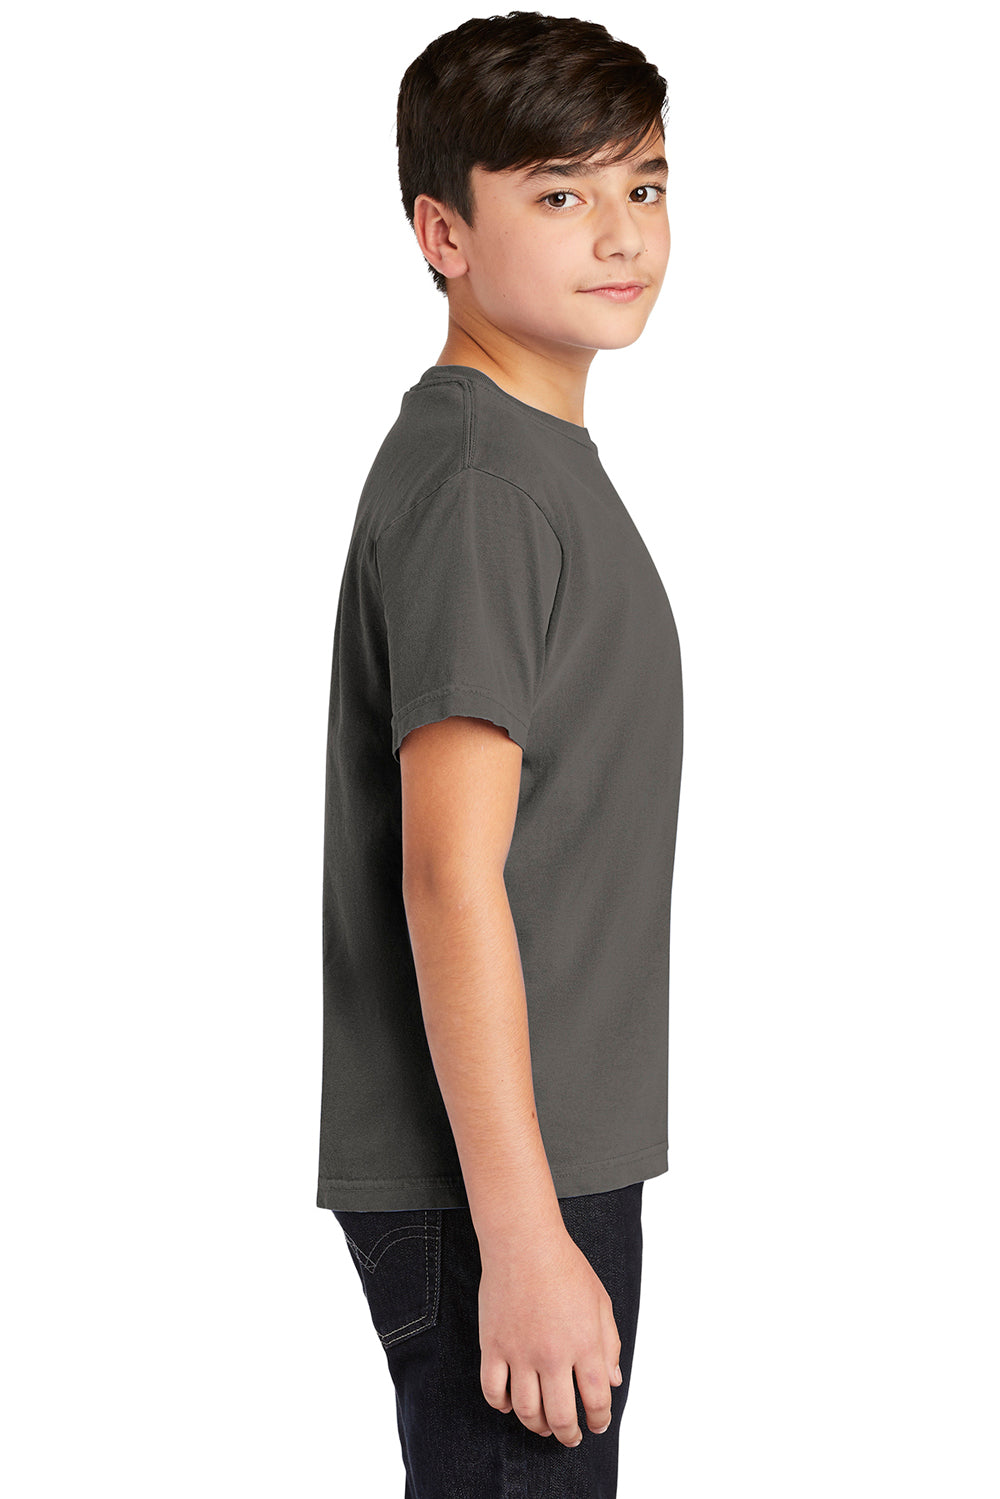 Comfort Colors 9018/C9018 Youth Short Sleeve Crewneck T-Shirt Grey Side